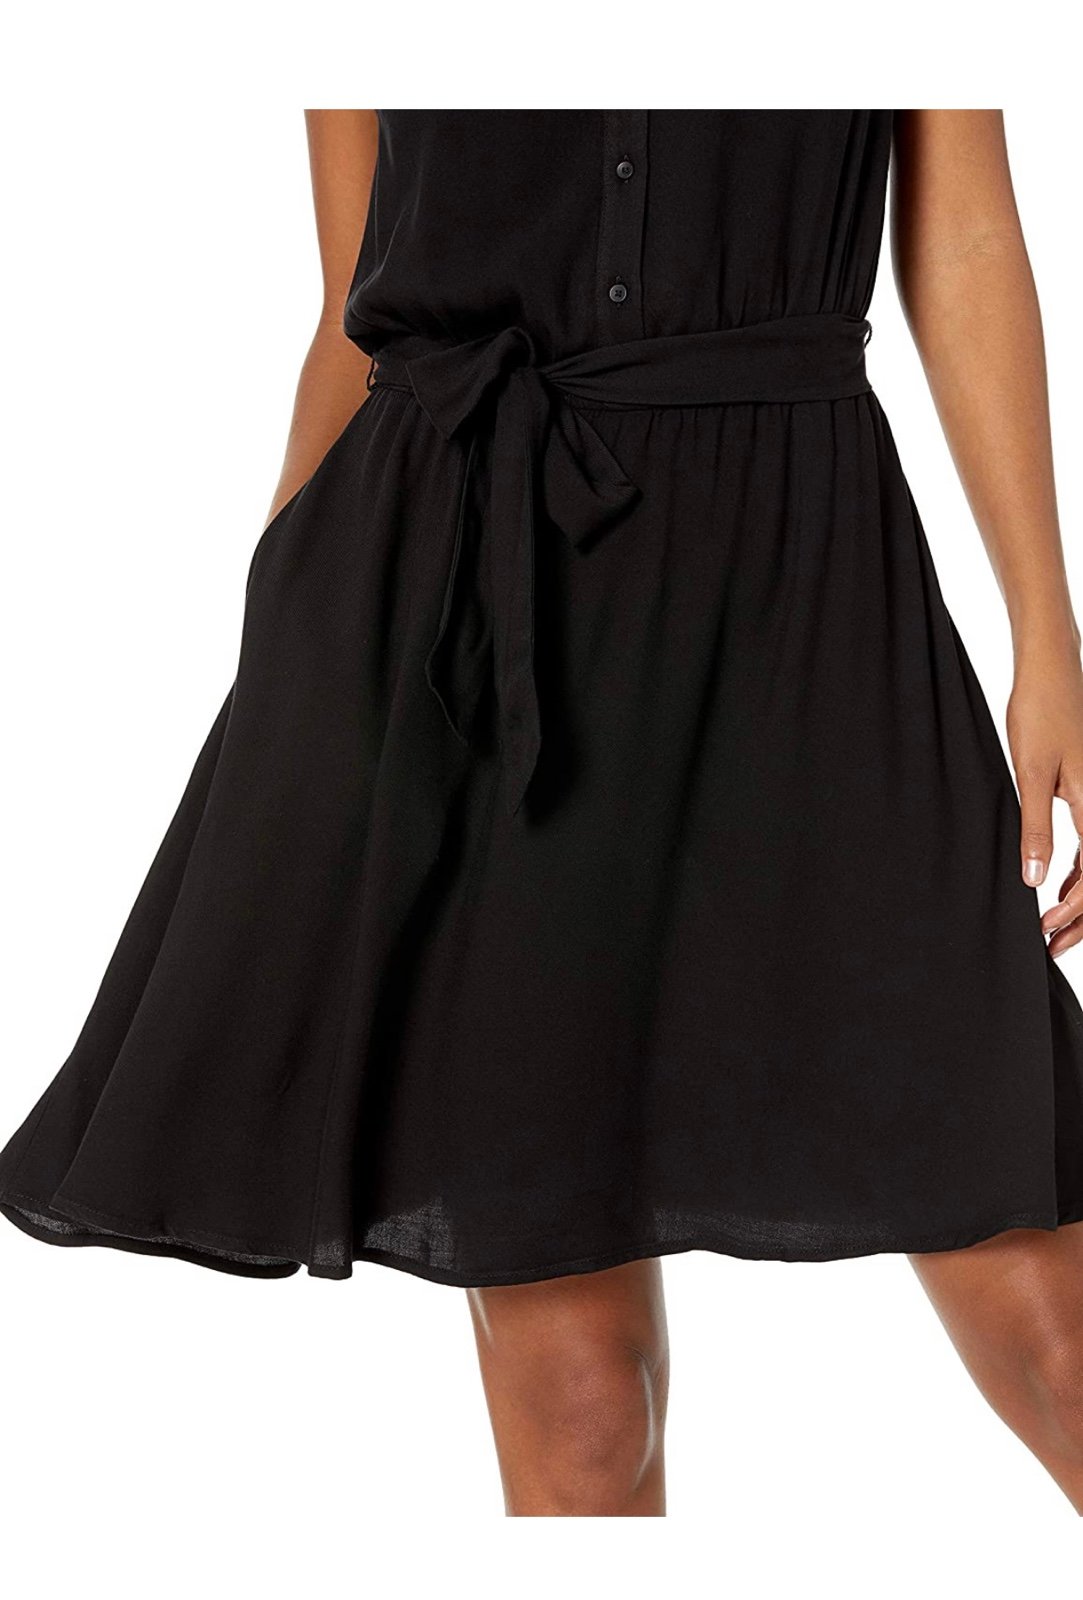 Wholesale price Amazon Essentials Women´s Sleeveless Woven Shirt Dress KQ9VX3FRL Online Shop